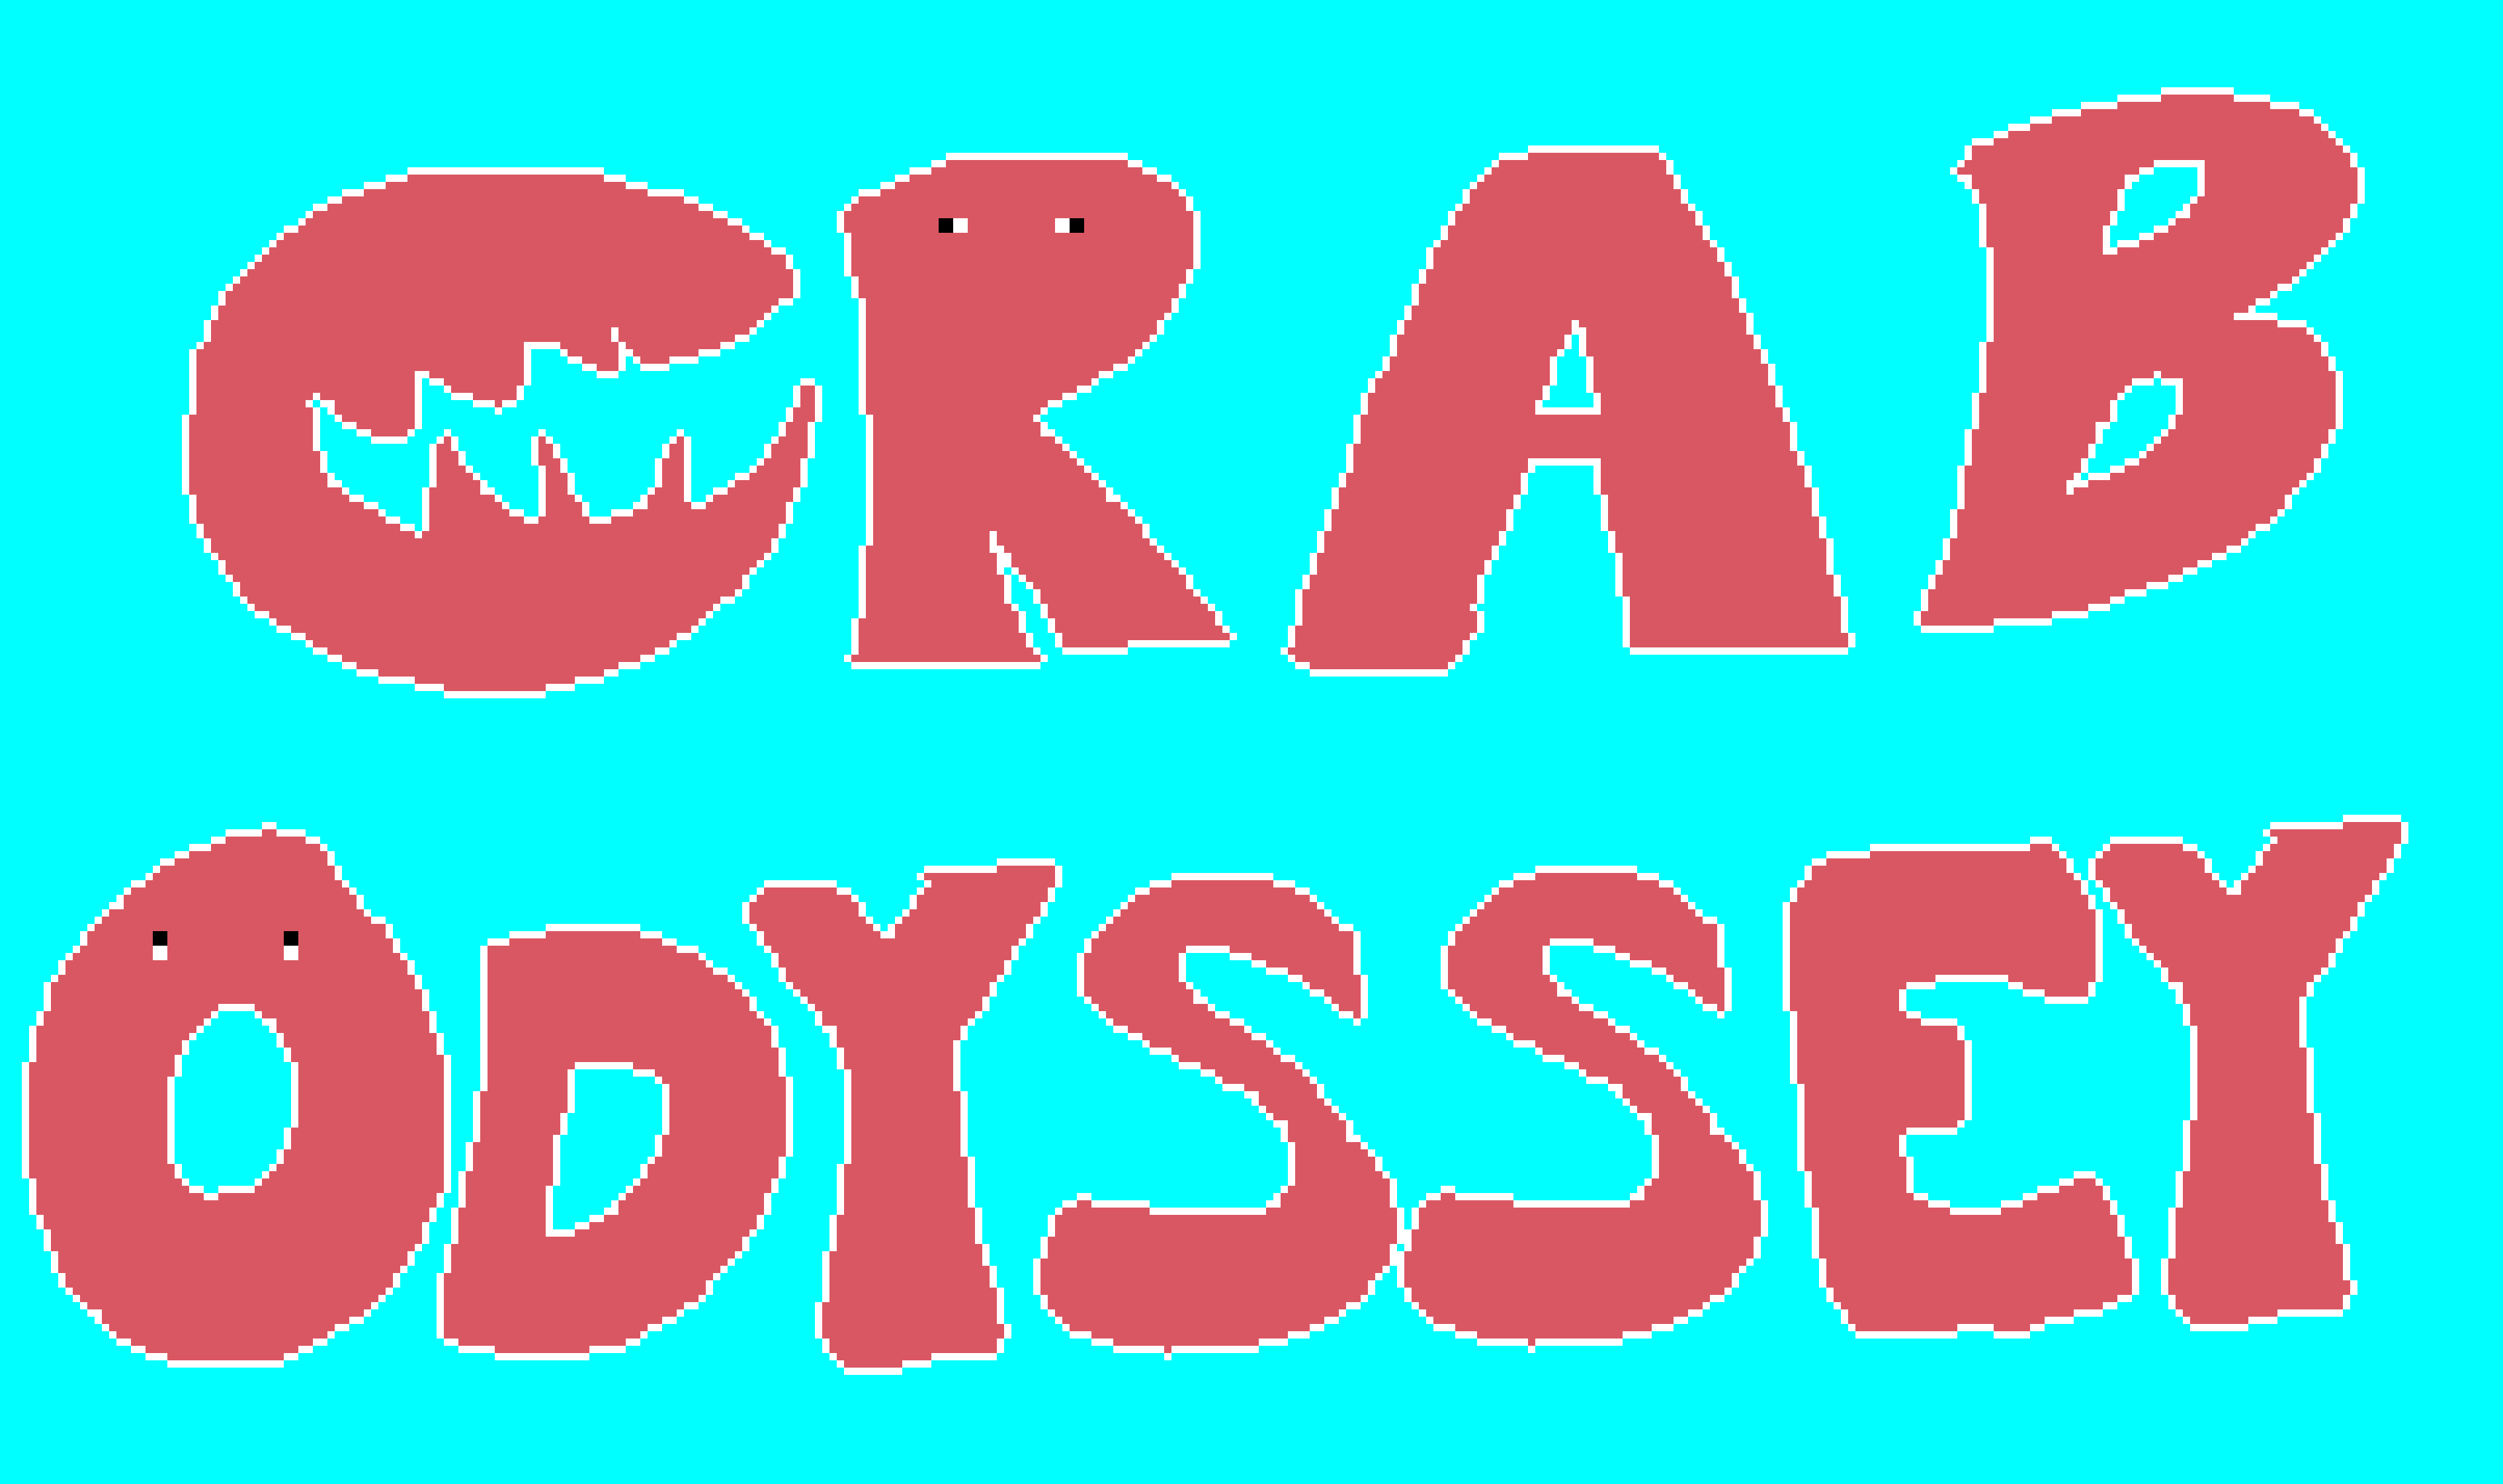 Crab Odyssey!